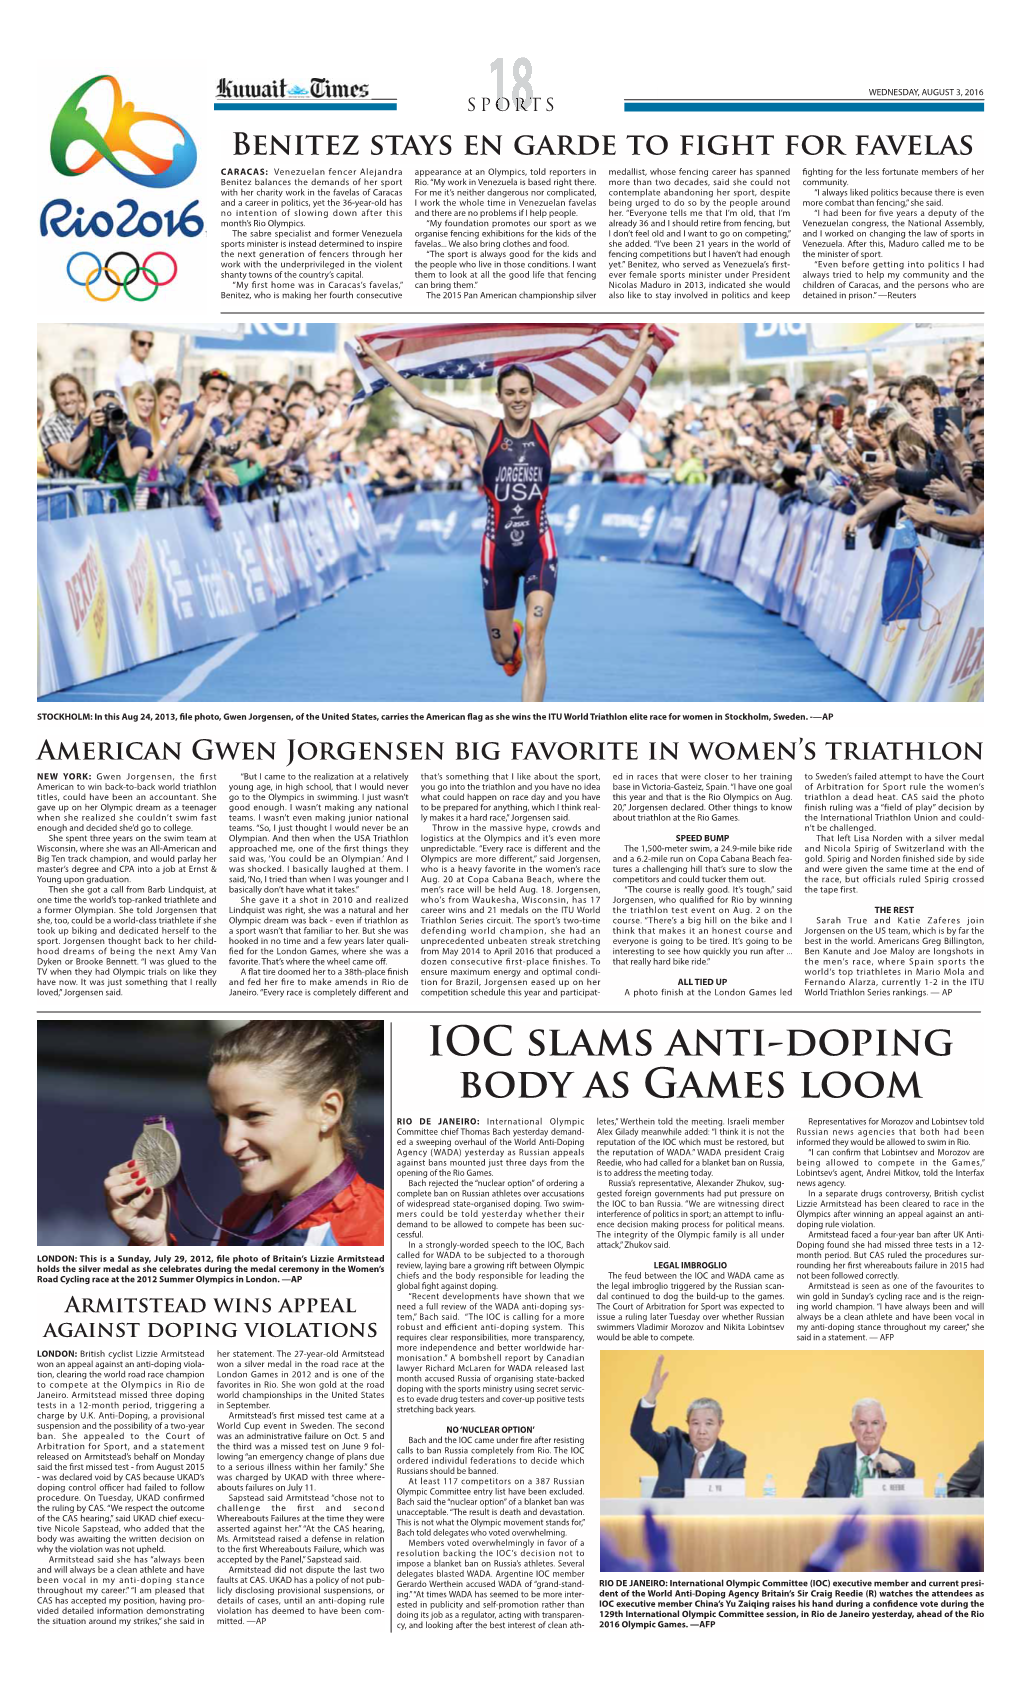 IOC Slams Anti-Doping Body As Games Loom